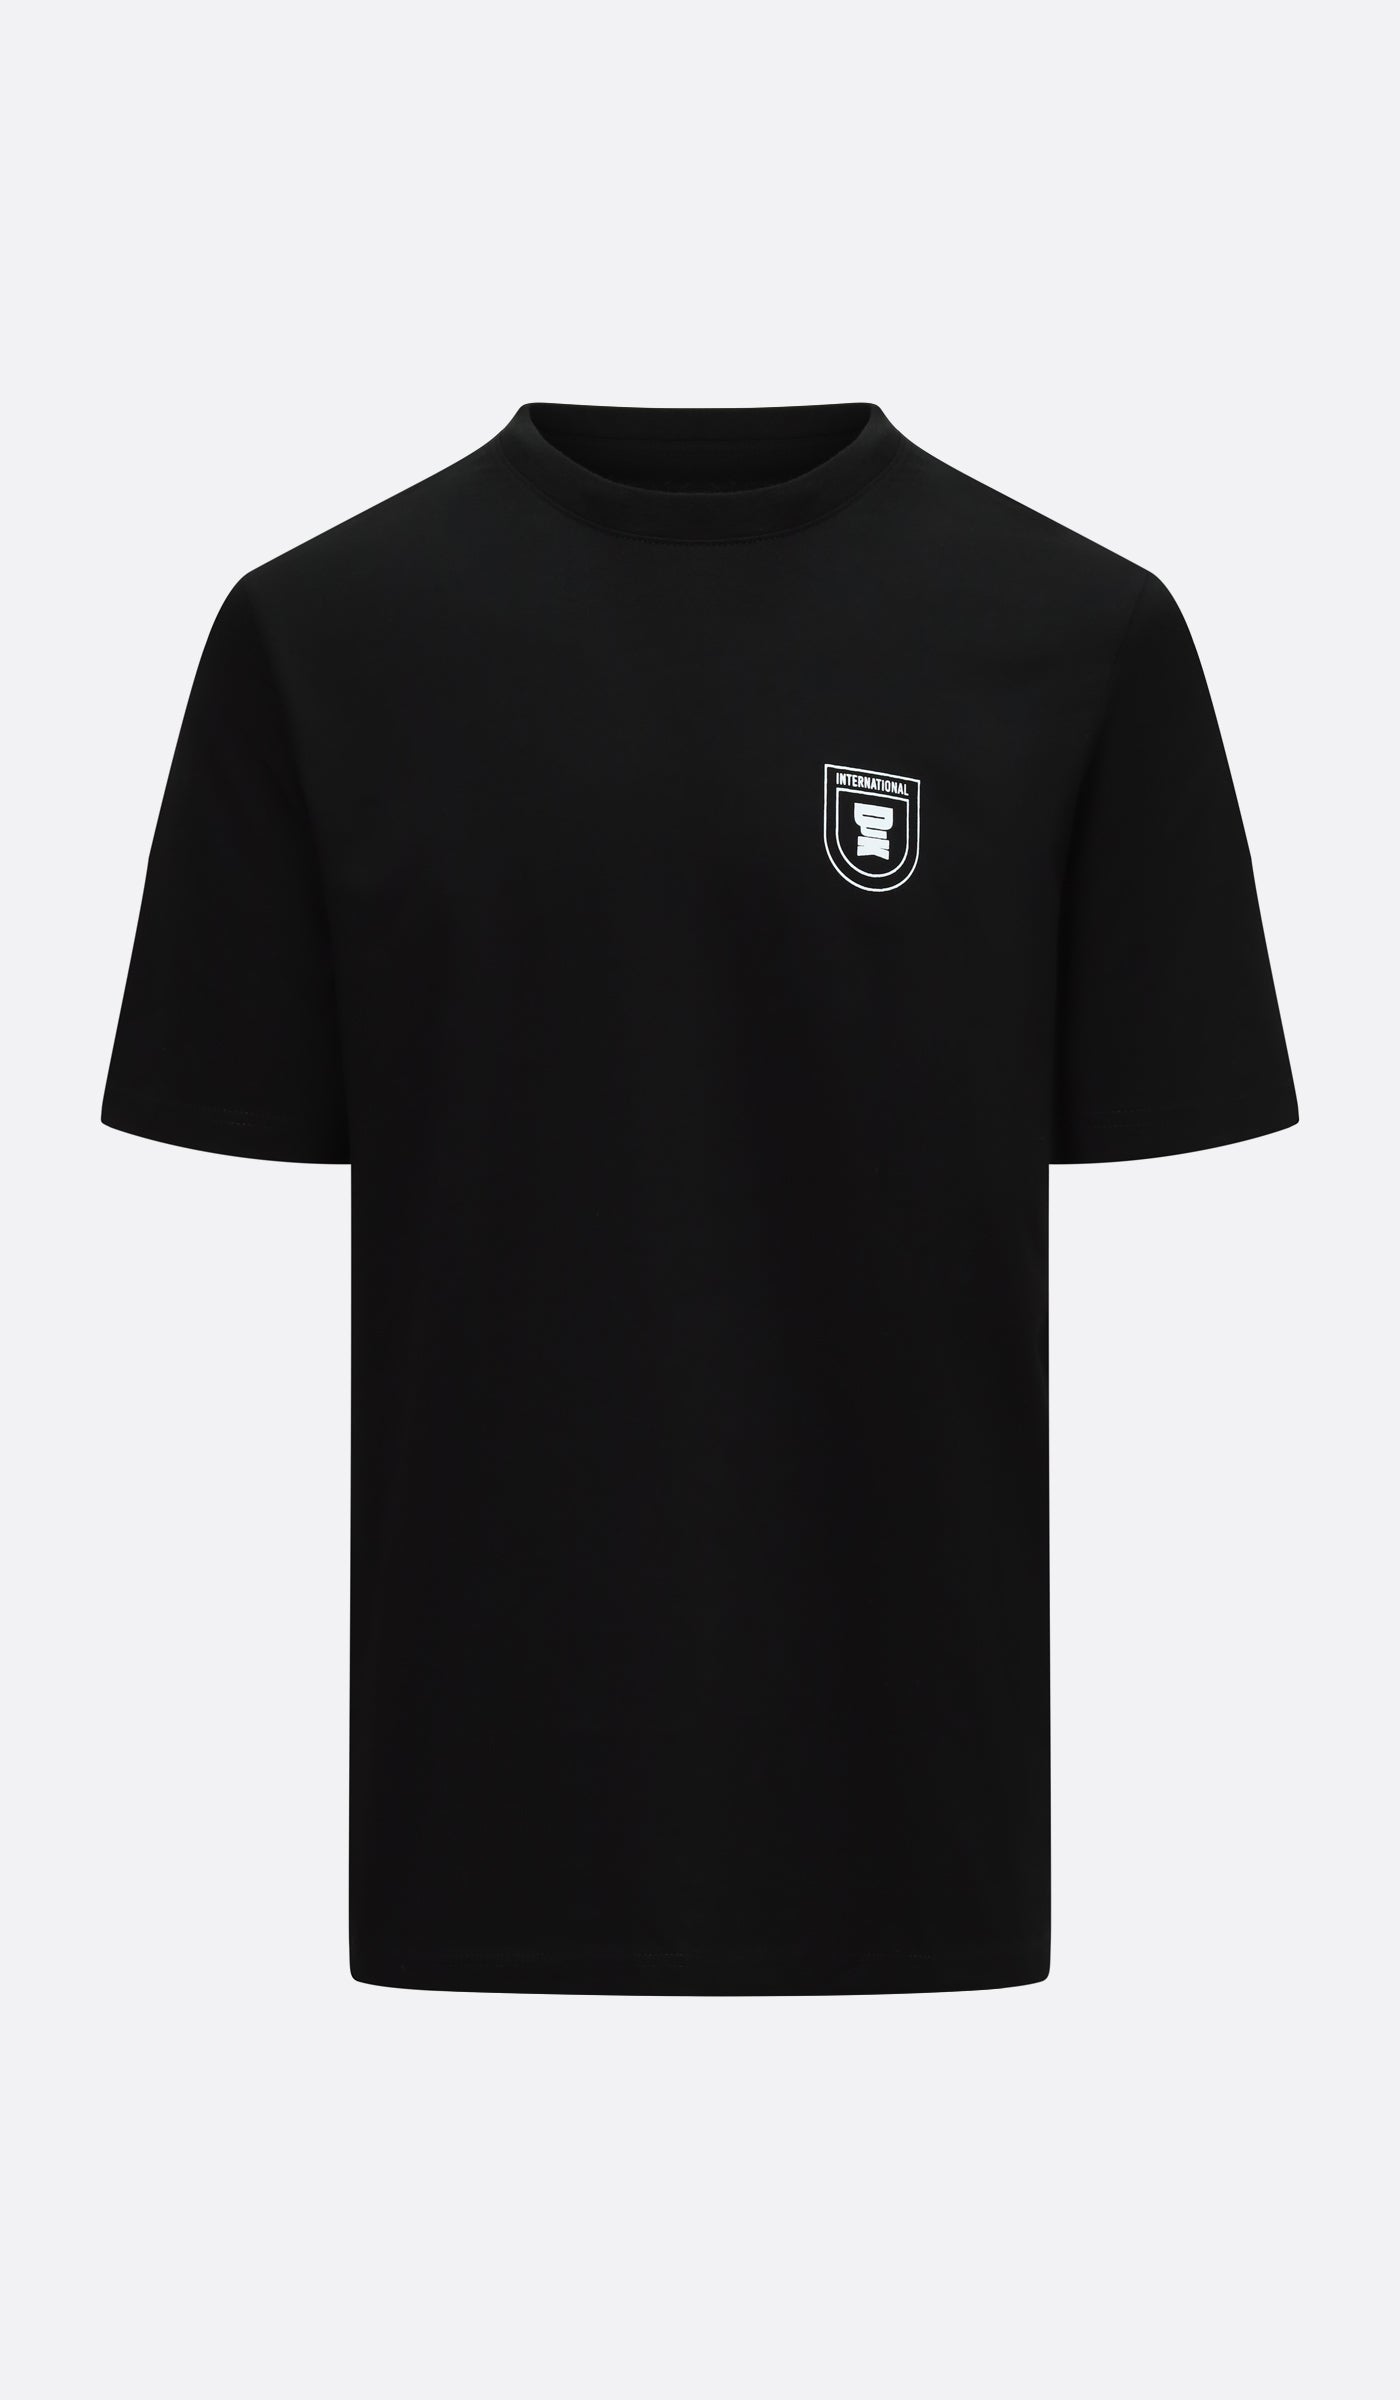 DJK Coat Of Arms T-Shirt